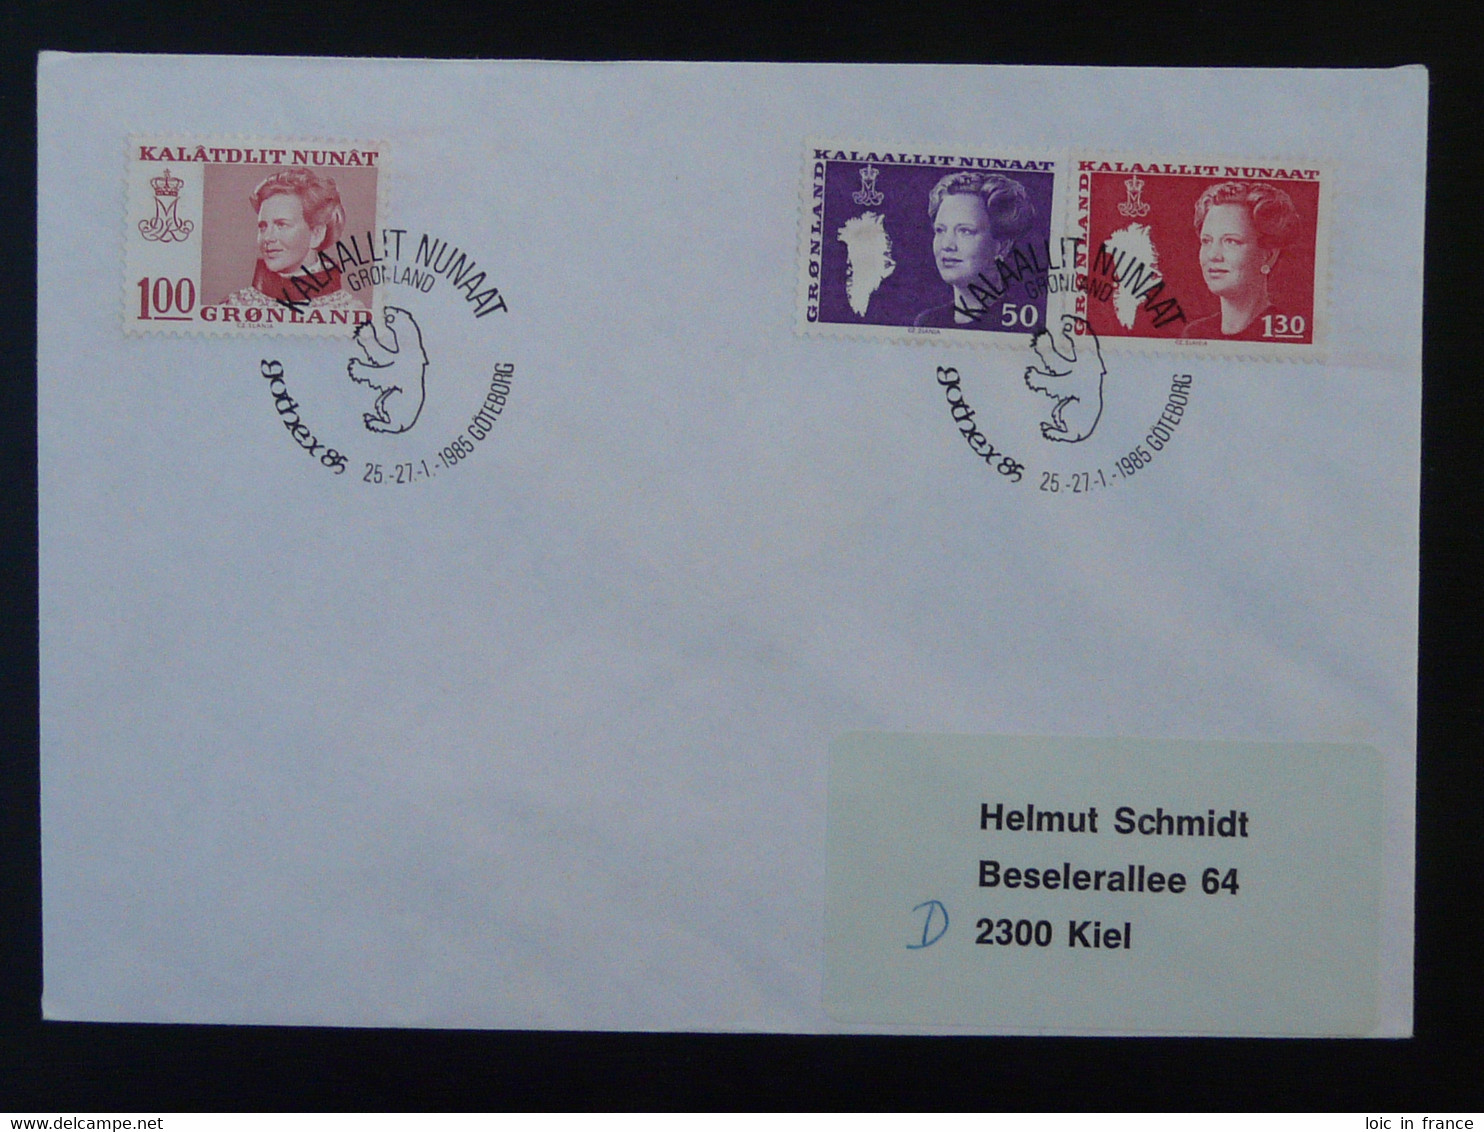 Lettre Cover Obliteration Postmark Gothex 1985 Goteborg Groenland Greenland (ex 1) - Storia Postale